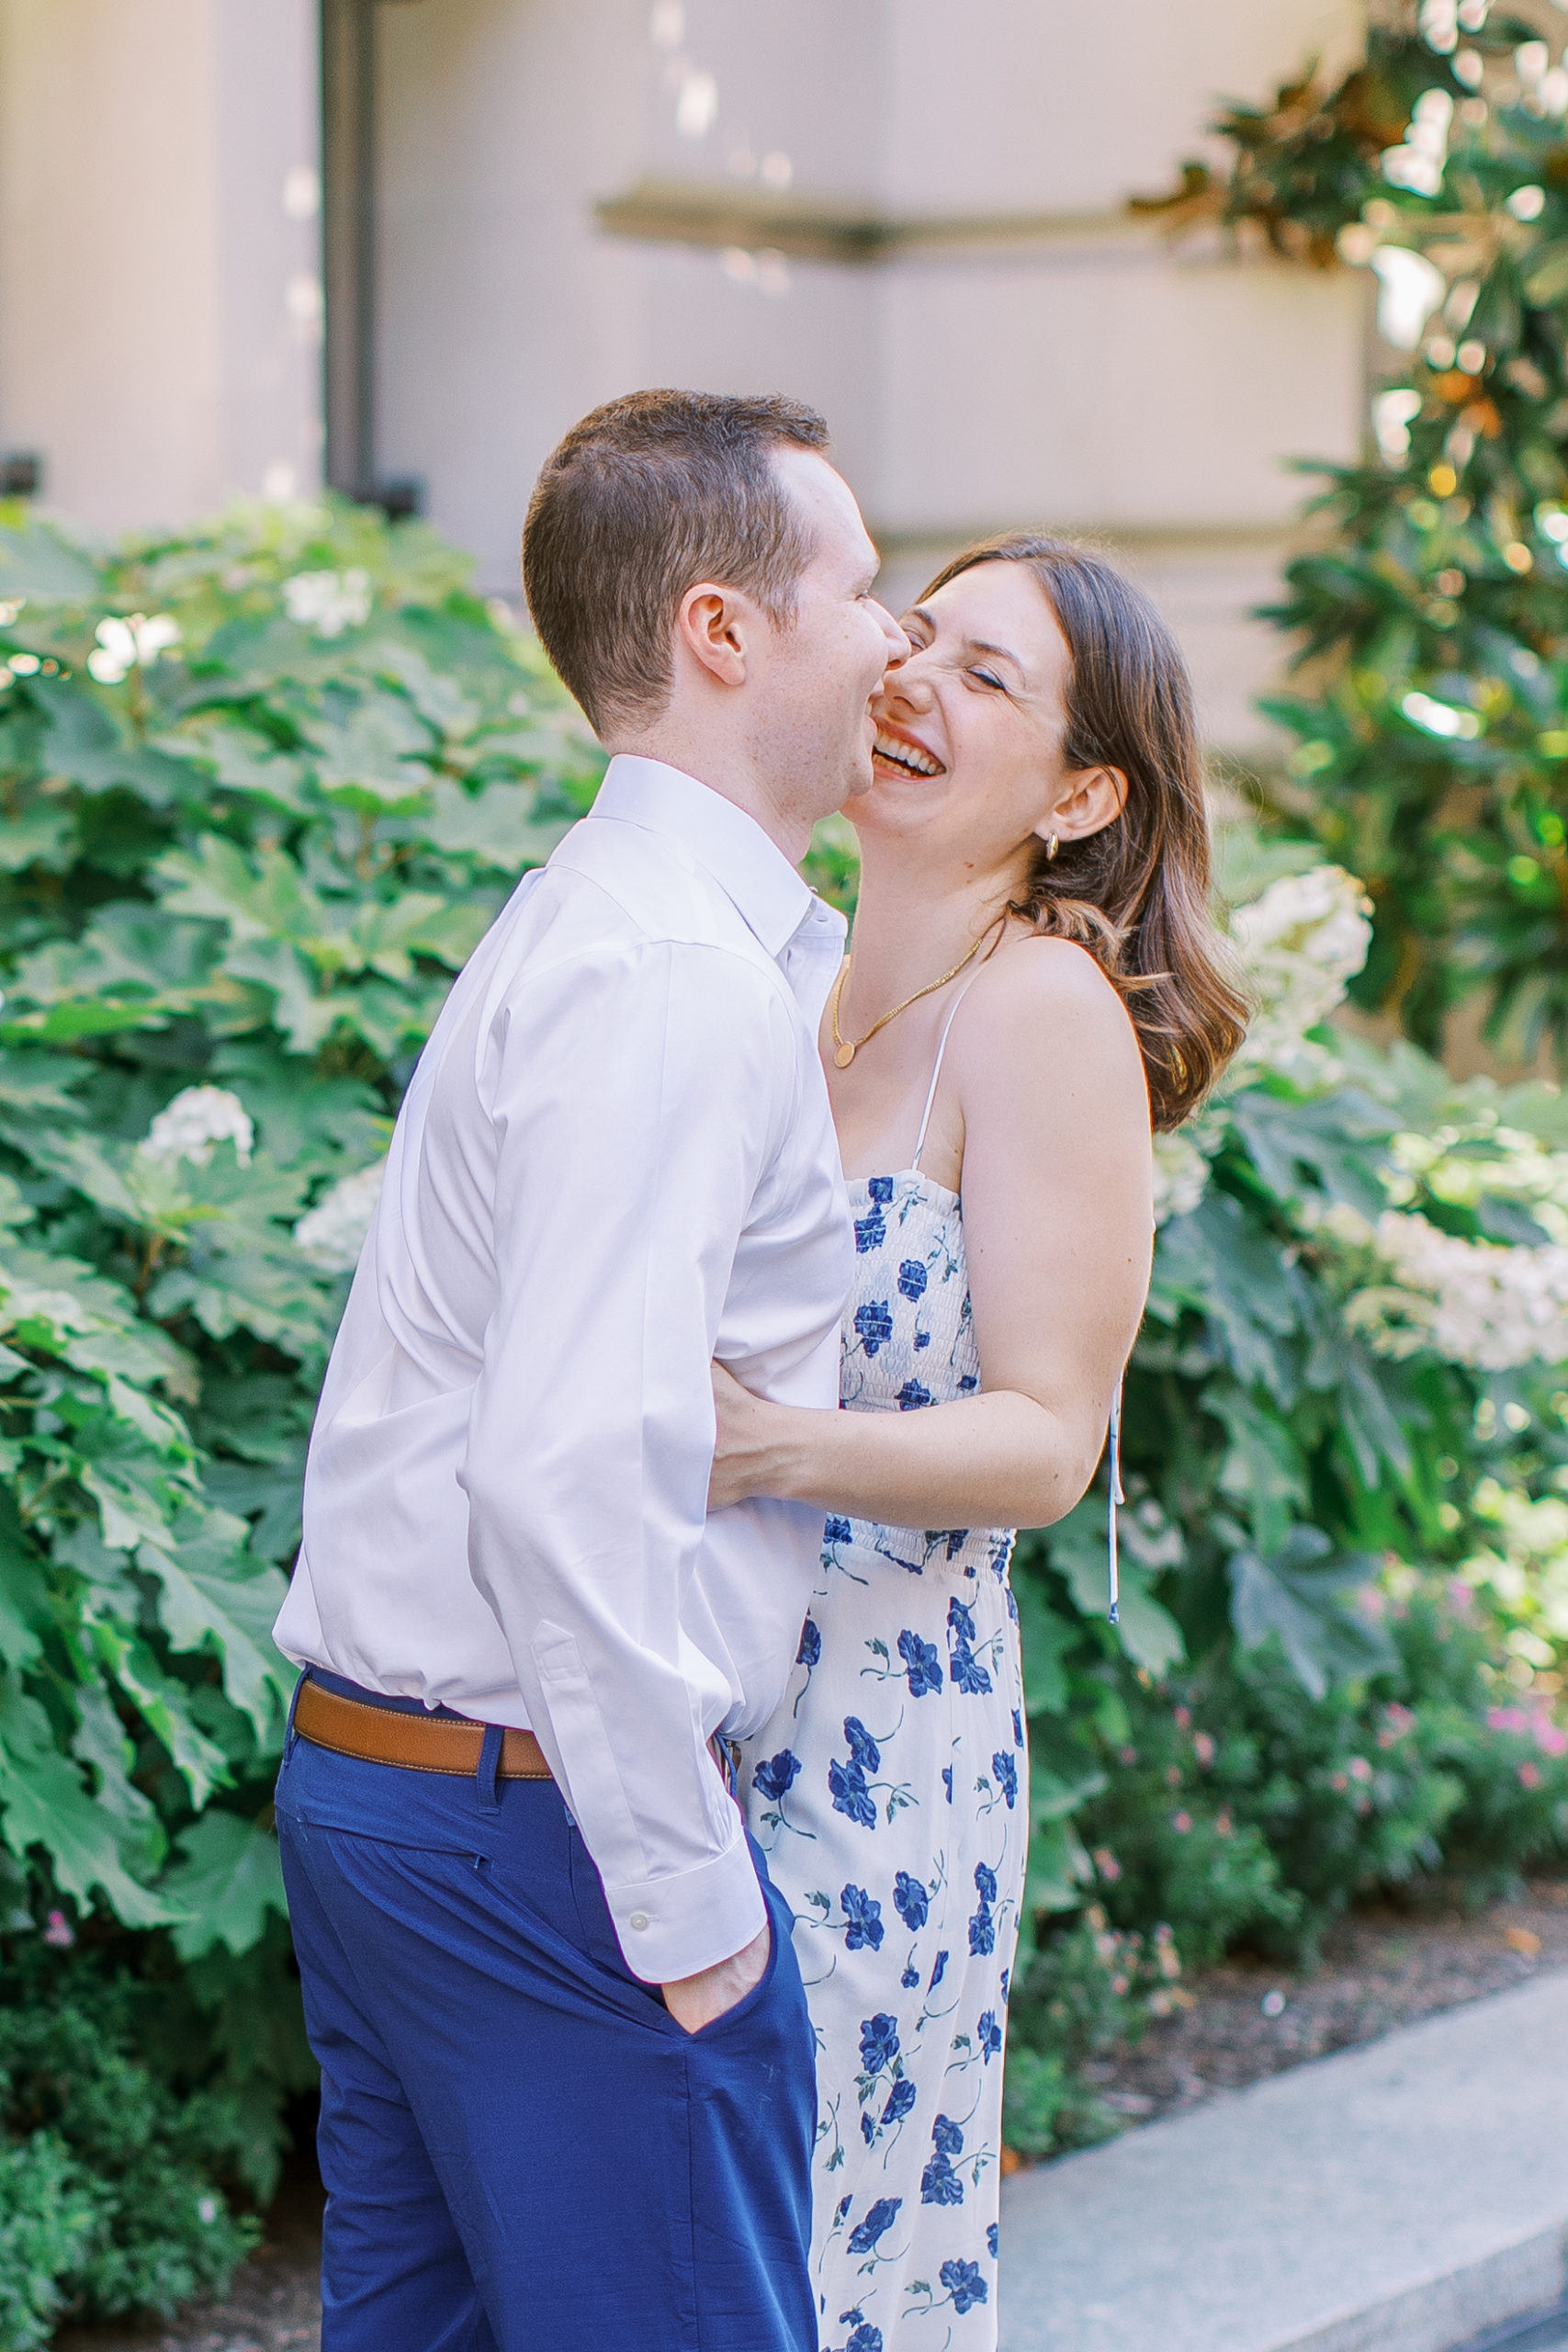 Couple embraces and laughs for Central Park Engagement Photos